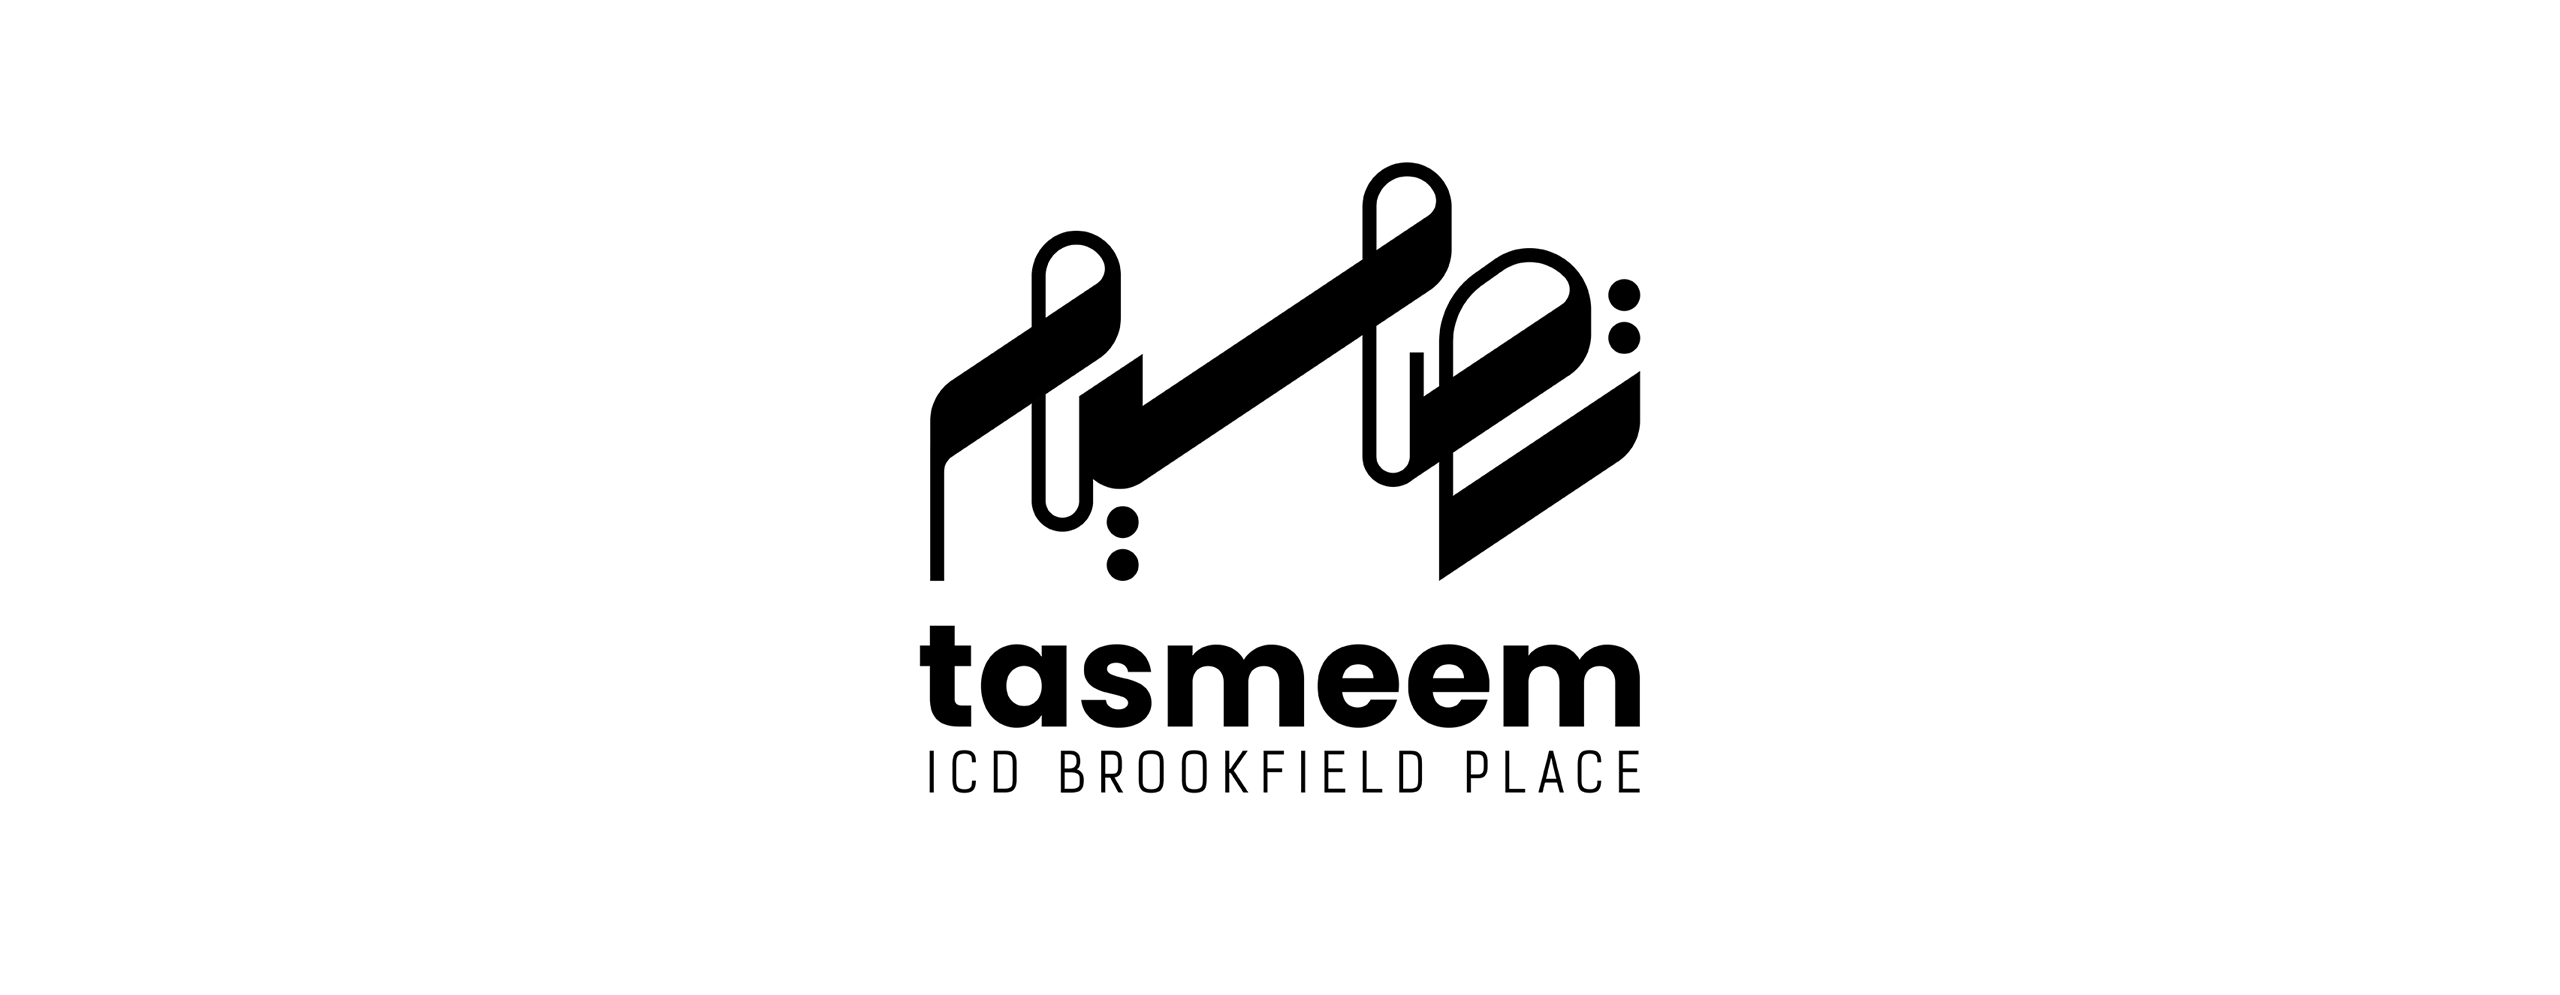 ICD Brookfield Place Dubai Tasmeem 2022: Open Call